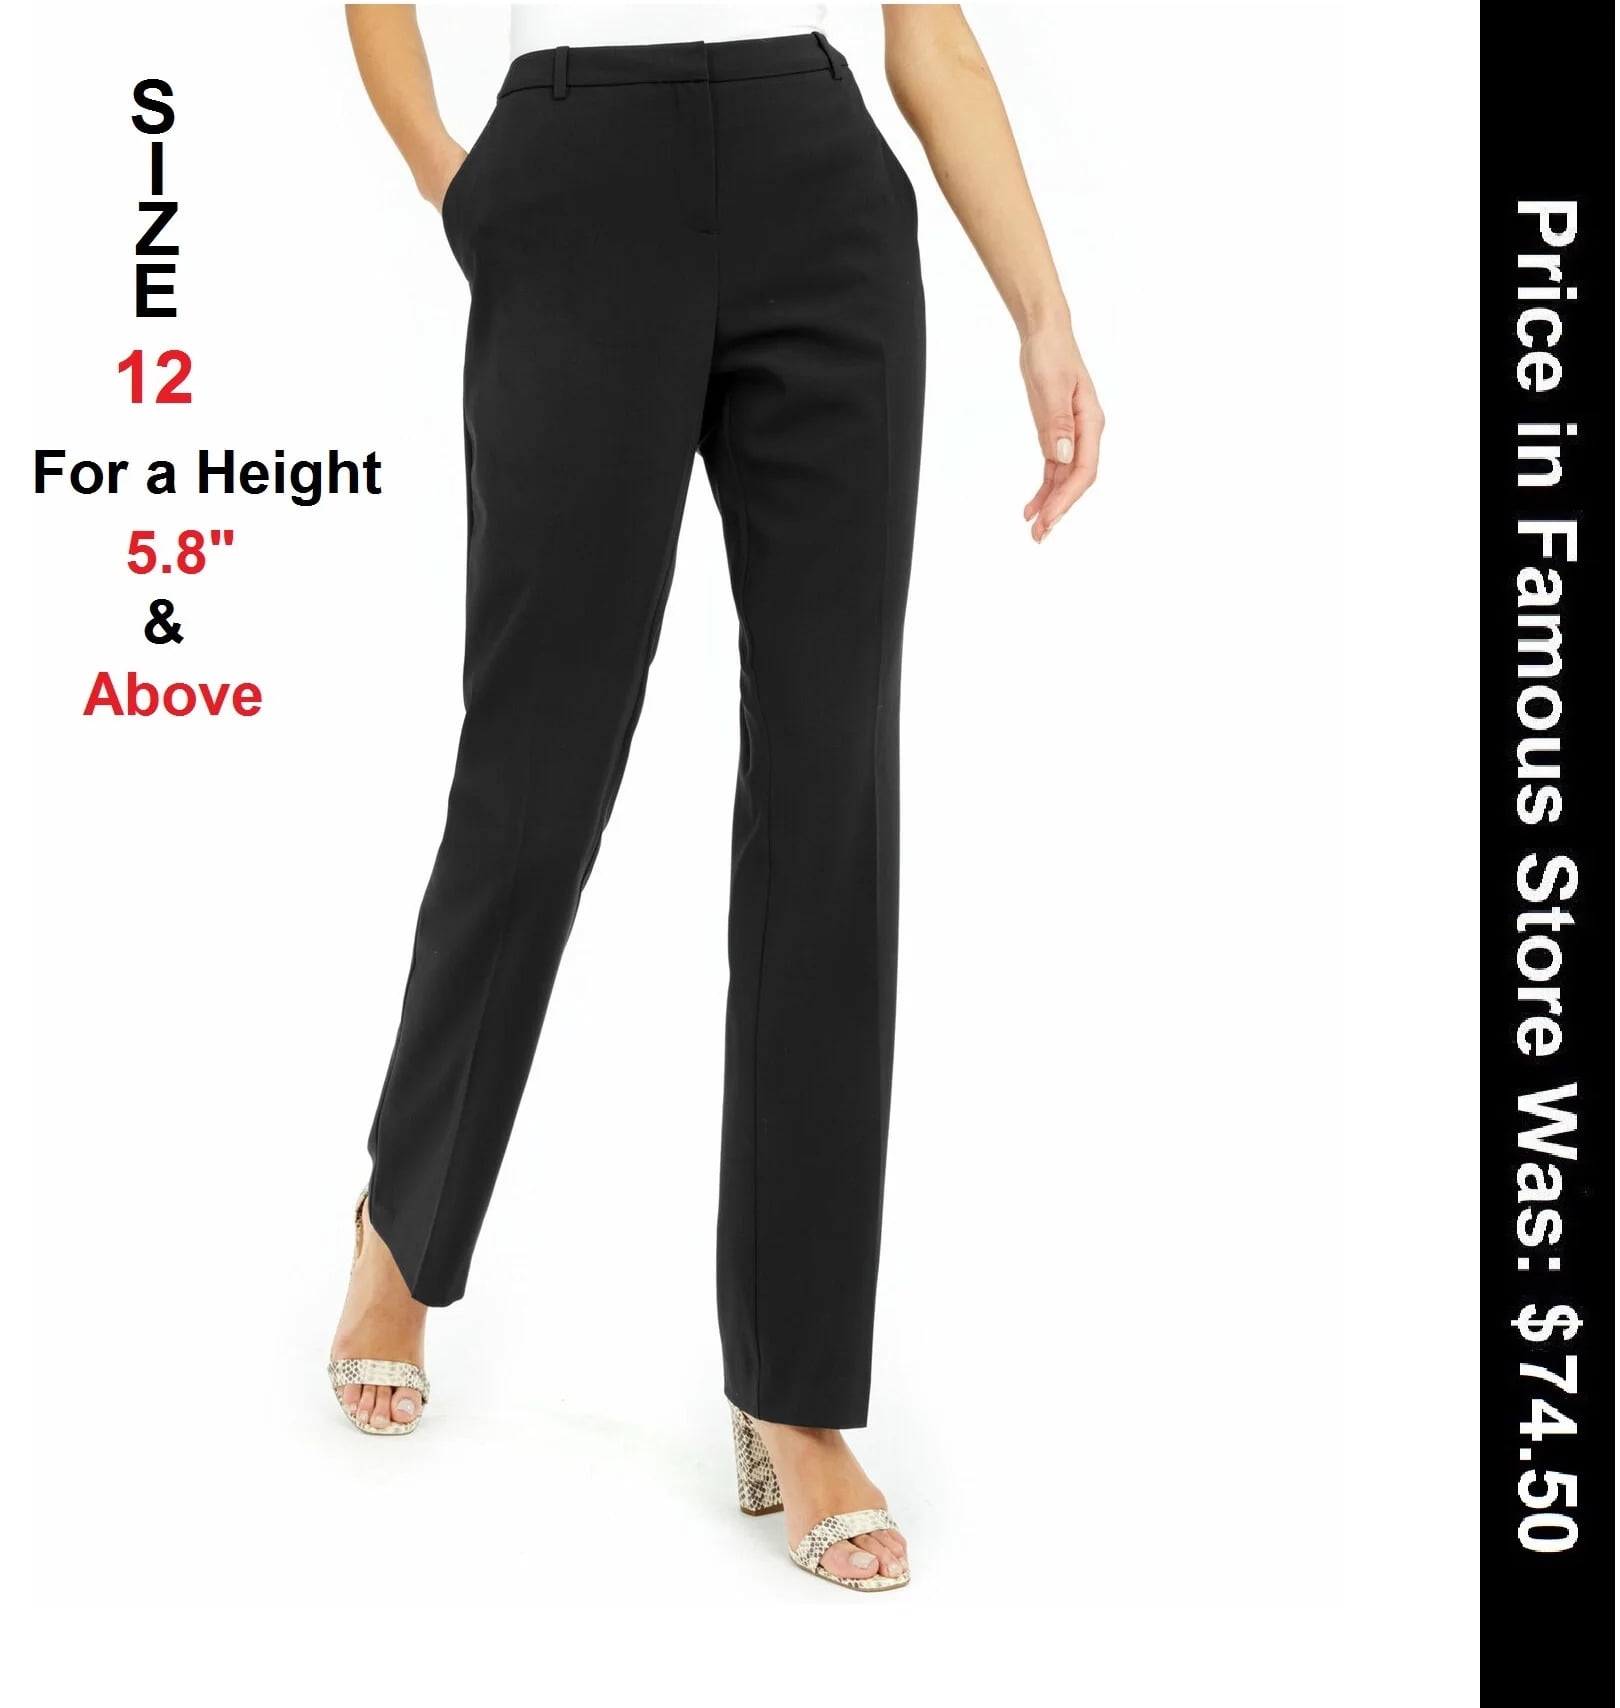 HDE Yoga Dress Pants for Women Straight Leg Pull On Pants with 8 Pockets  Khaki - L Regular